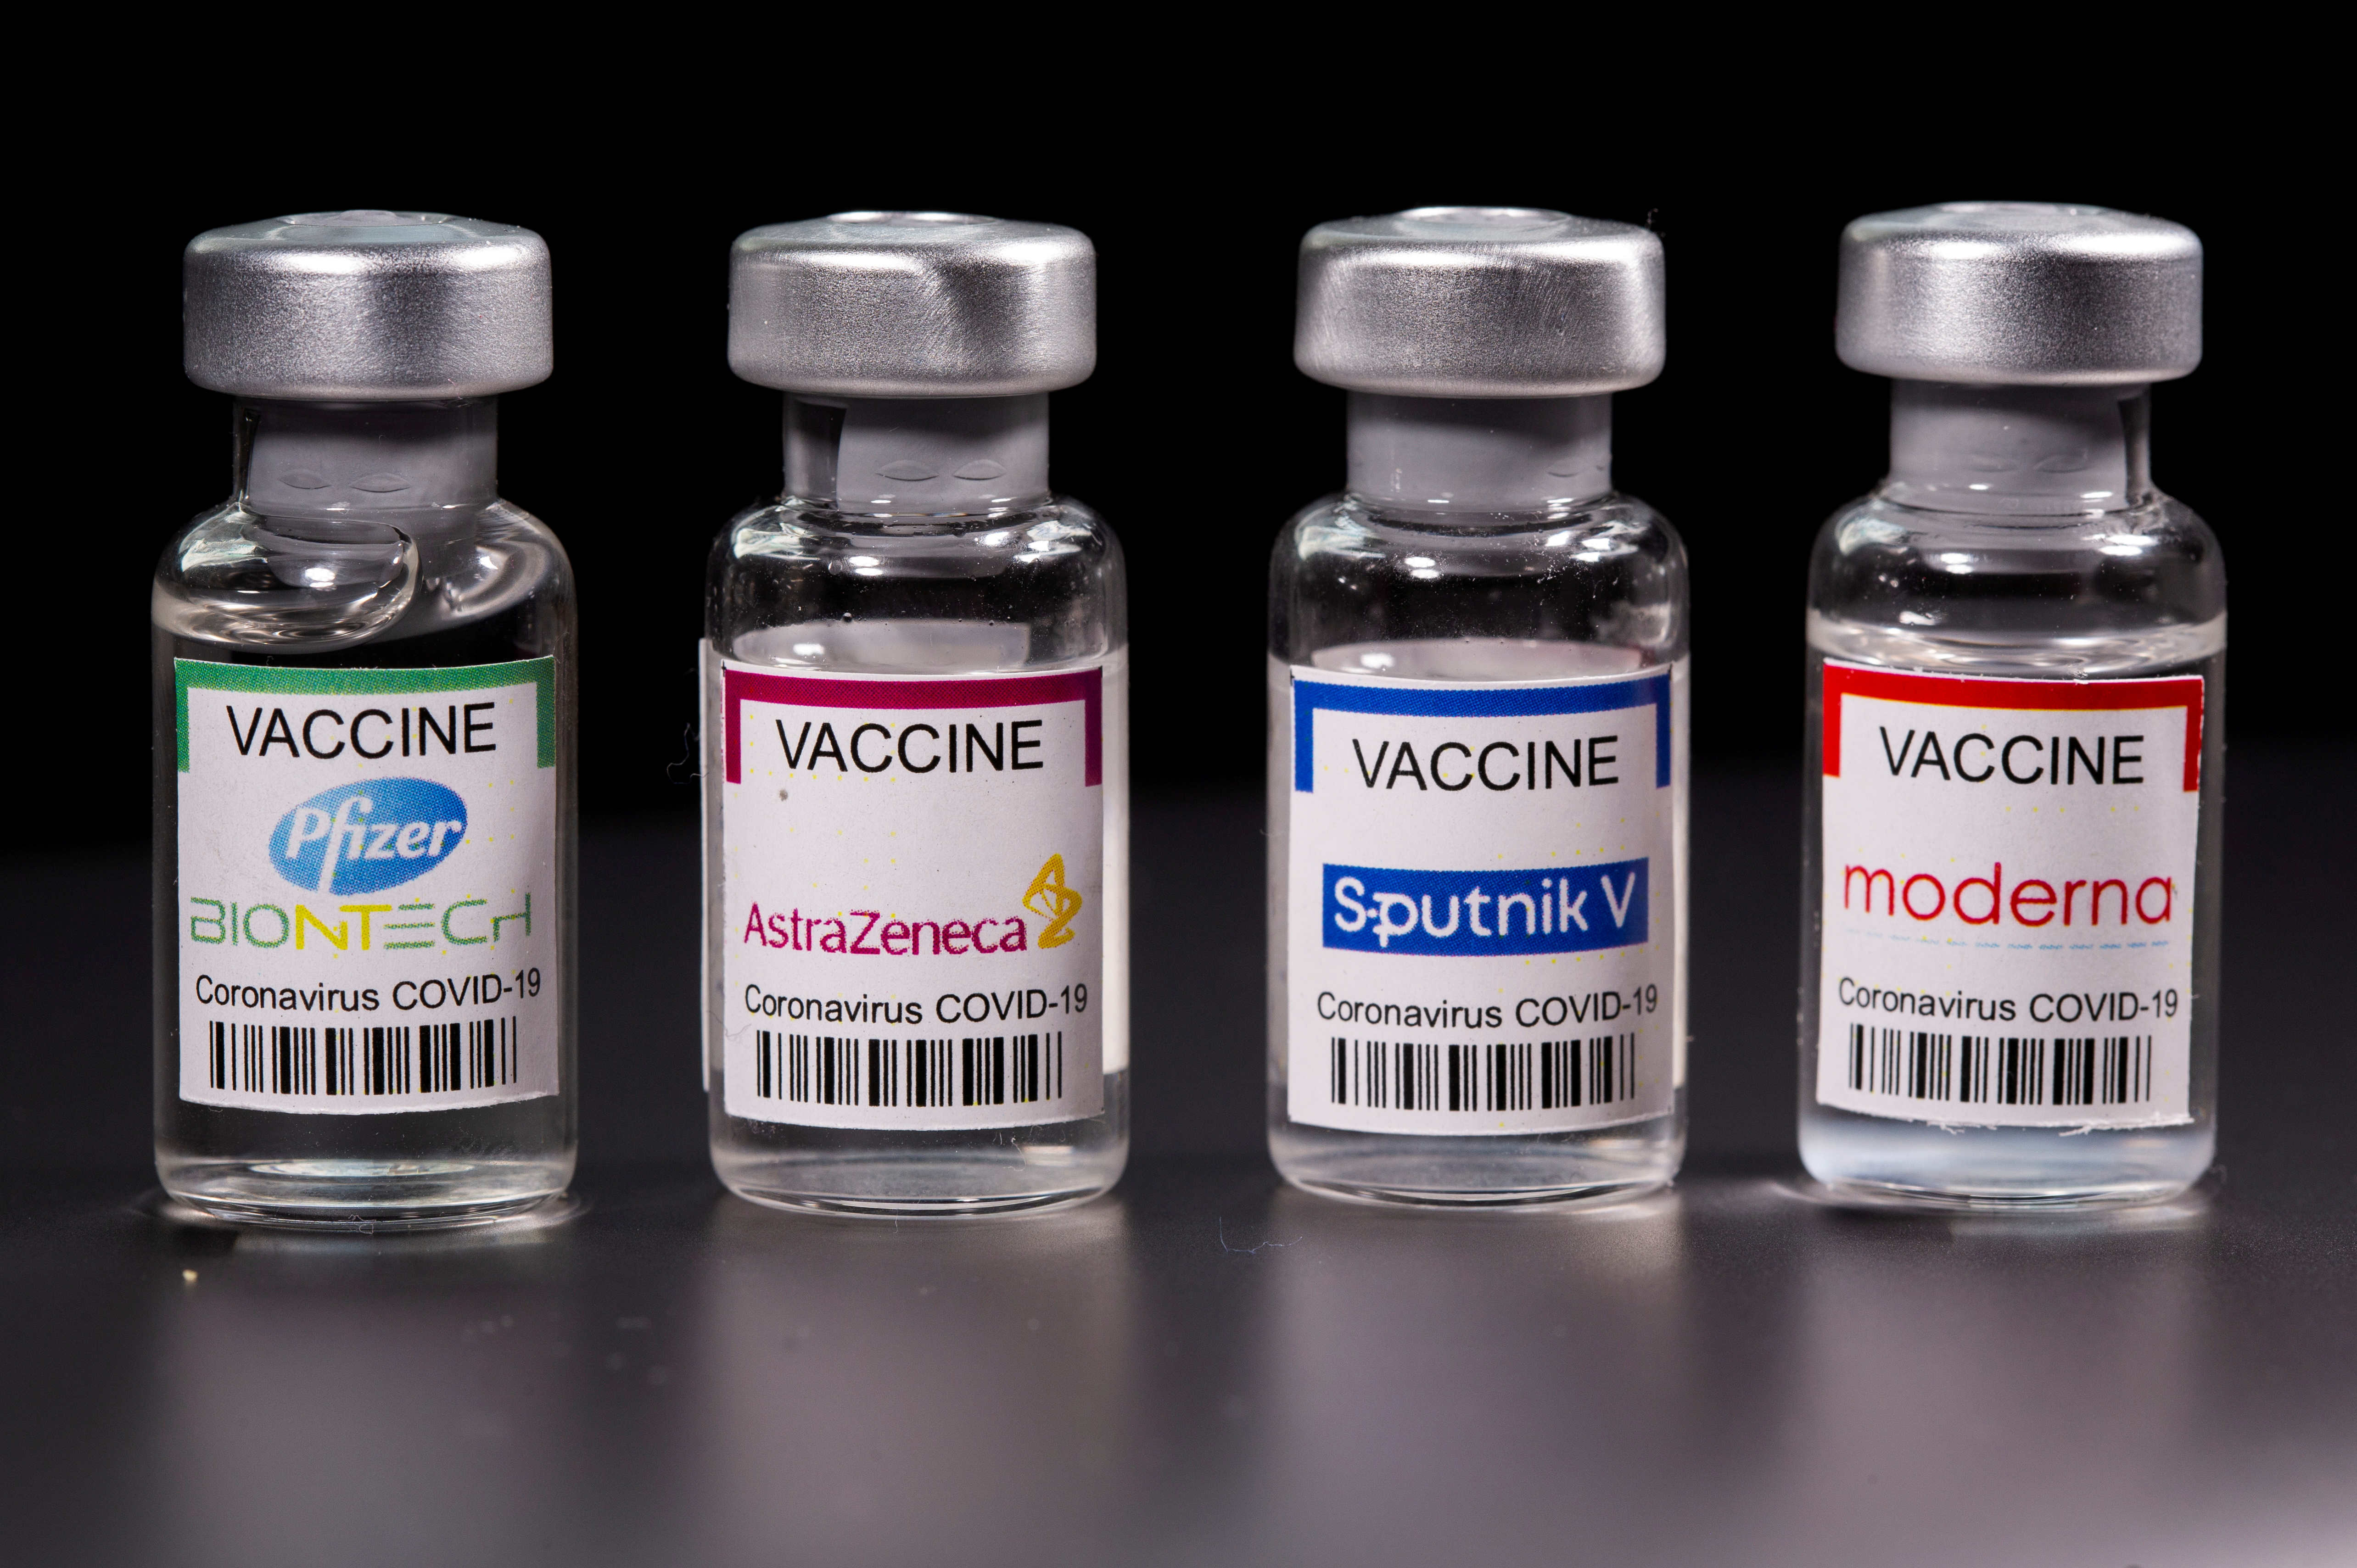 Picture illustration of vials with Pfizer-BioNTech, AstraZeneca, Sputnik V, and Moderna coronavirus disease (COVID-19) vaccine labels